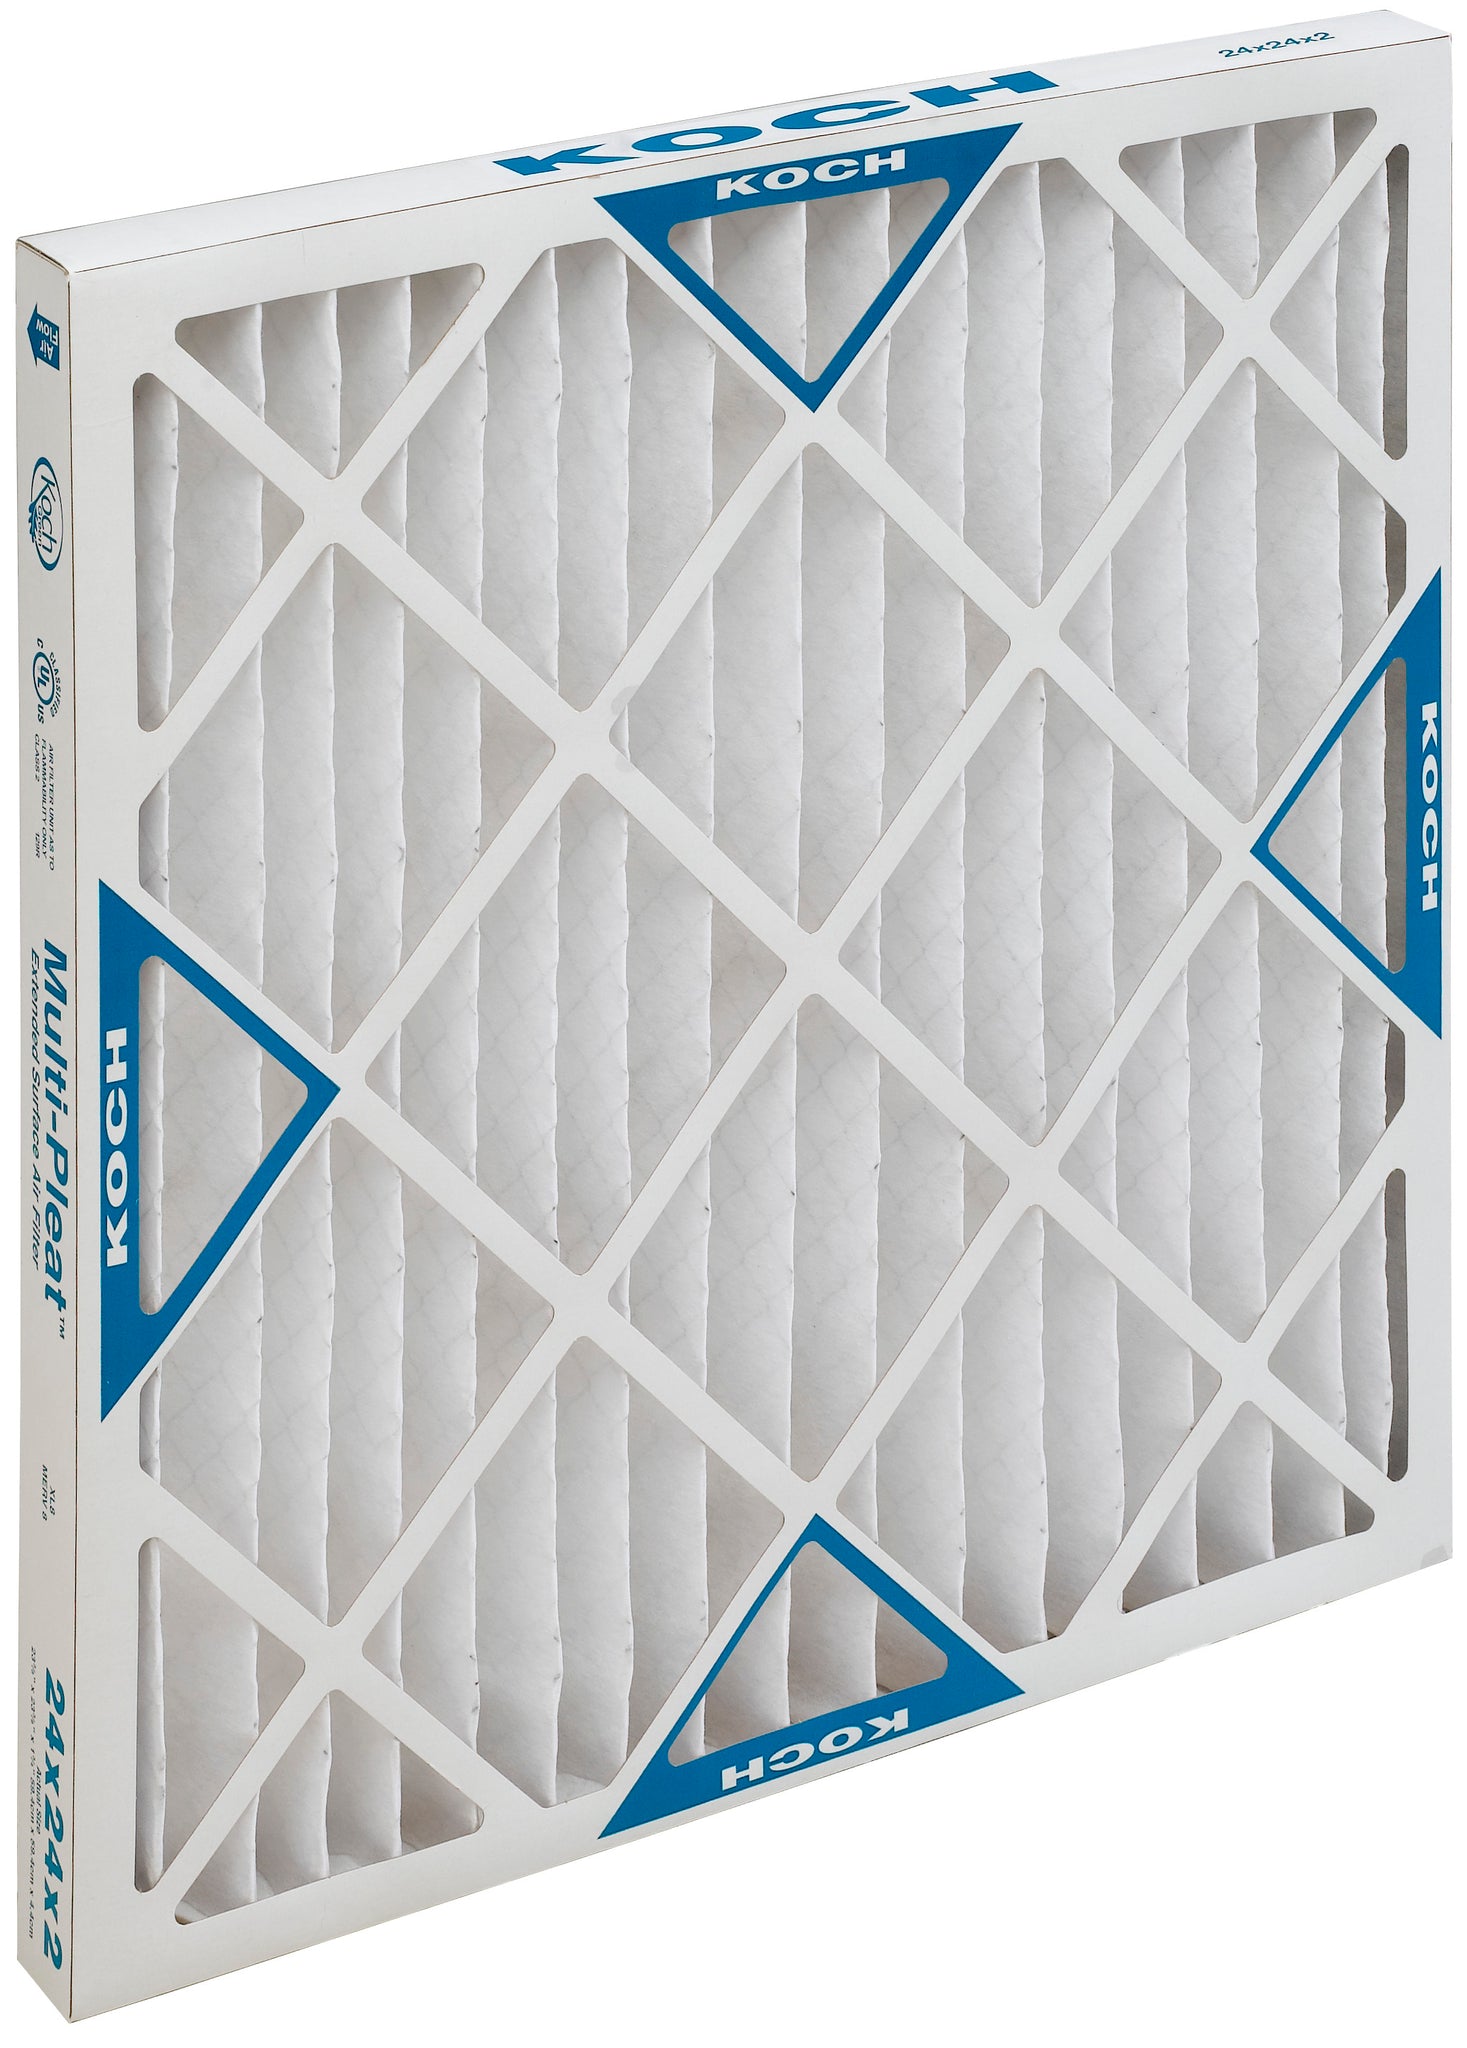 Koch Filter 102-500-005 MULTI-PLEAT XL11-HC 1" High Capacity MERV 11 Pleated Panel Filter Size 15x20x1